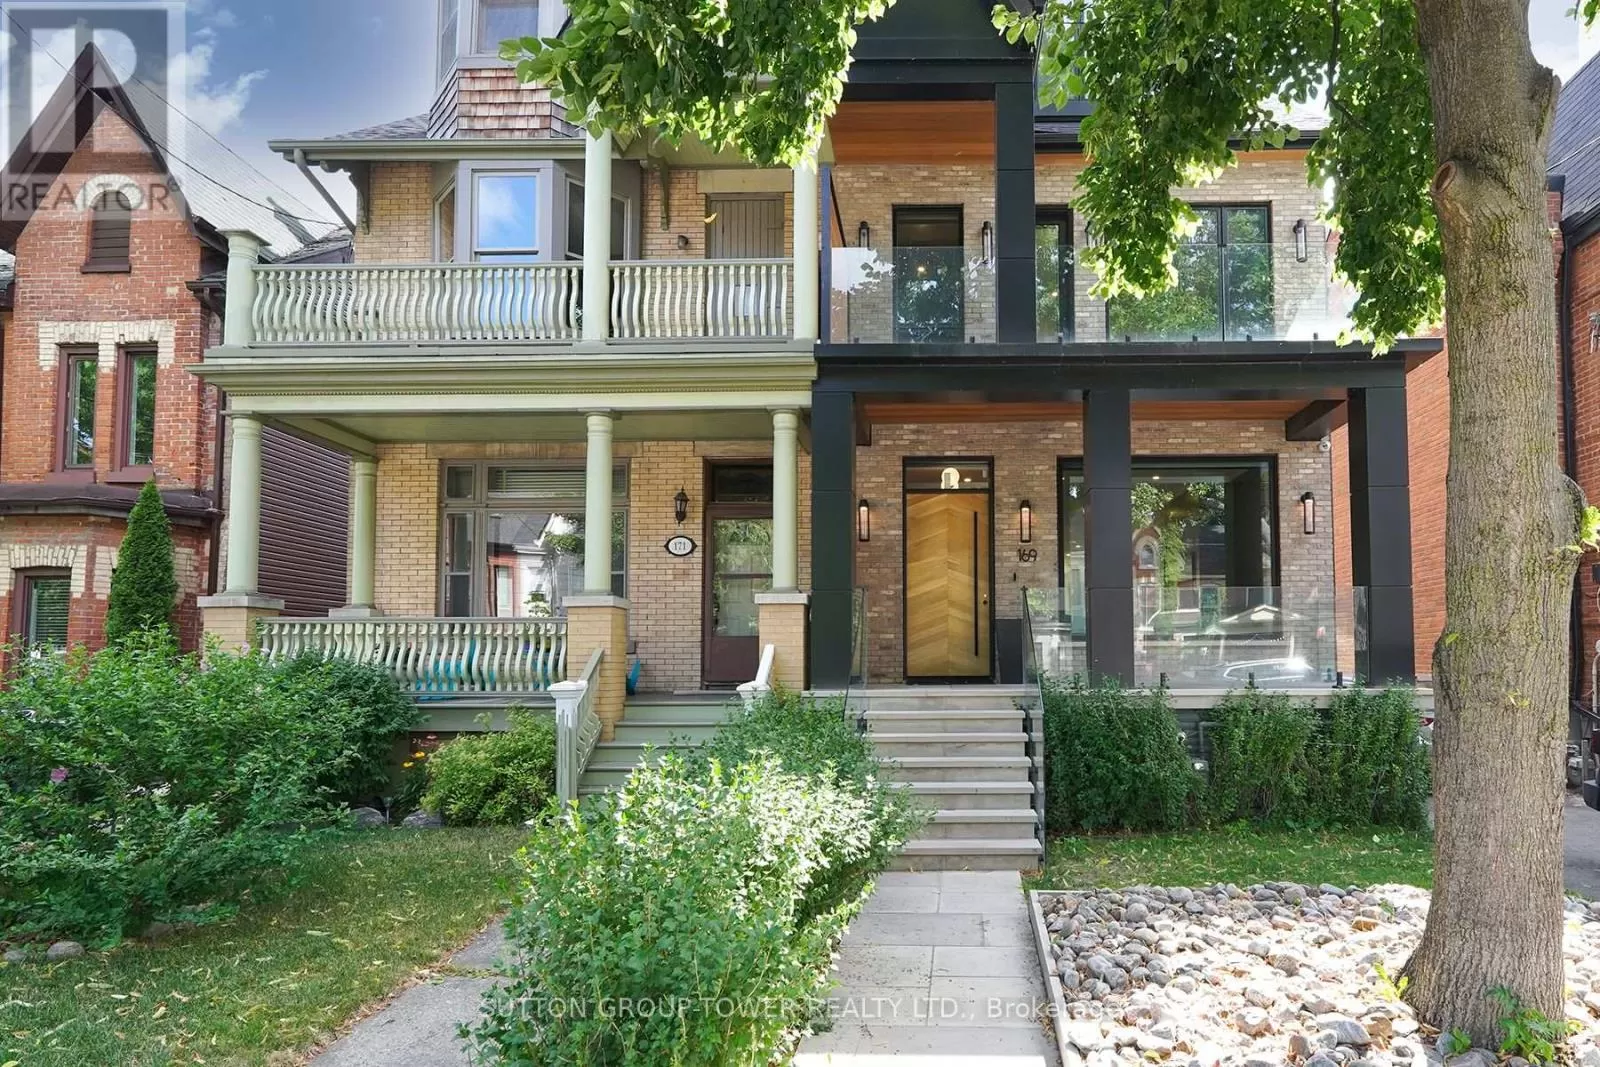 House for rent: 169 Strachan Avenue, Toronto, Ontario M6J 2T1